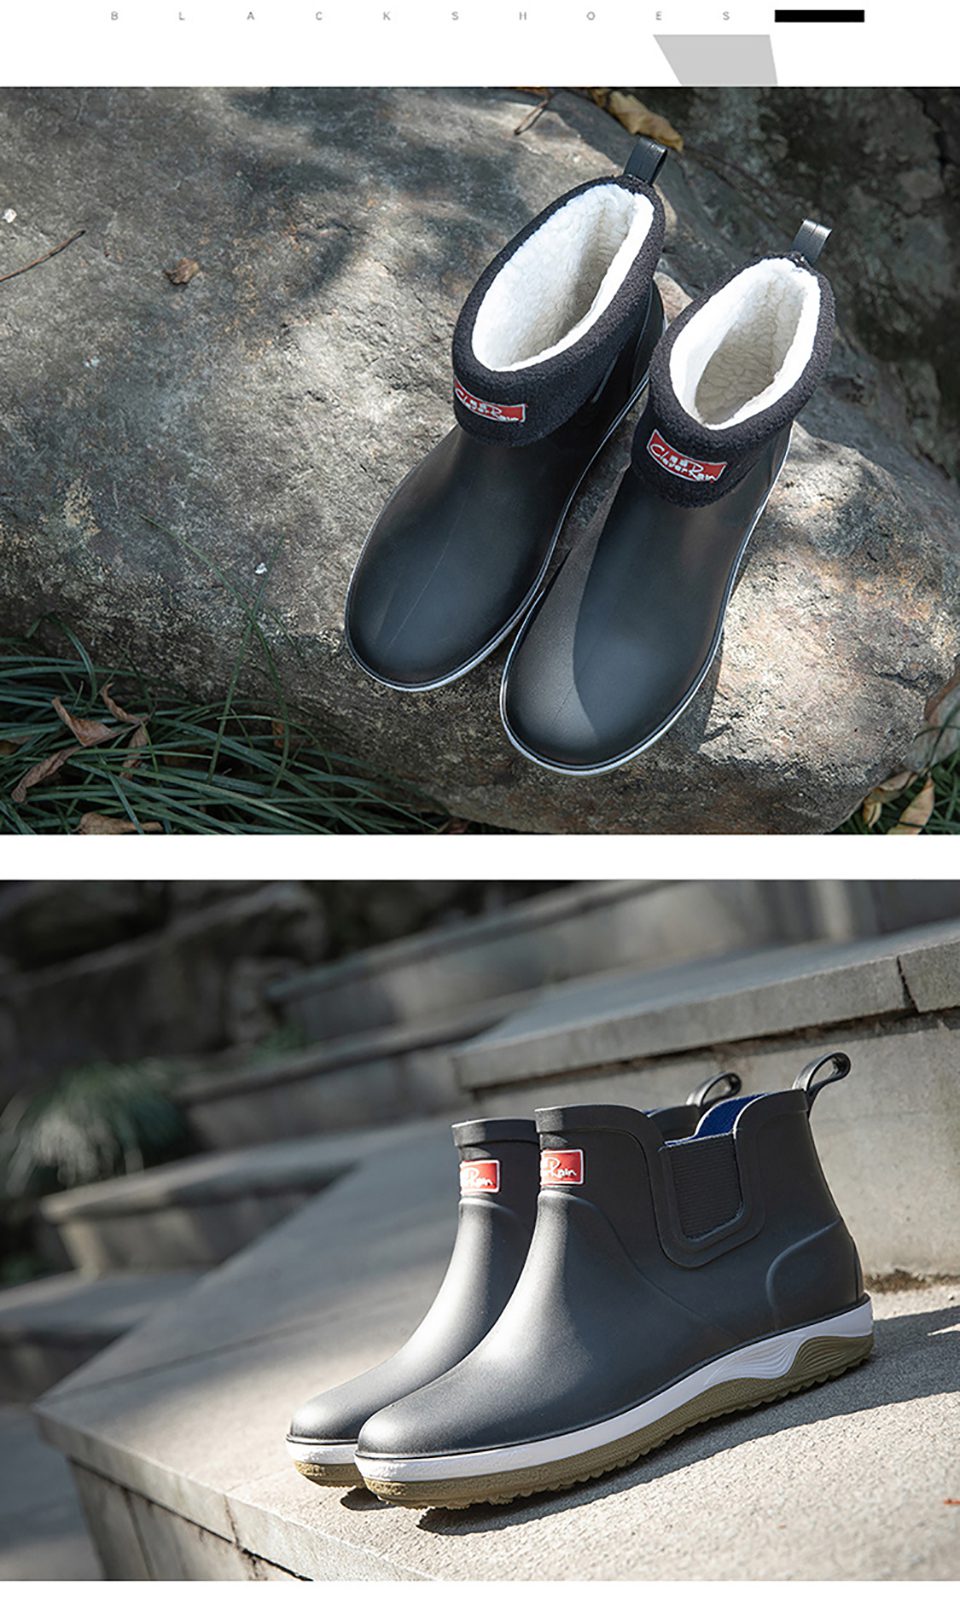 GRITION Men Rain Boots Non Slip Working Kitchen Fishing Water Shoes Fashion Waterproof Plush Short Tube Cotton Boots 2021 New